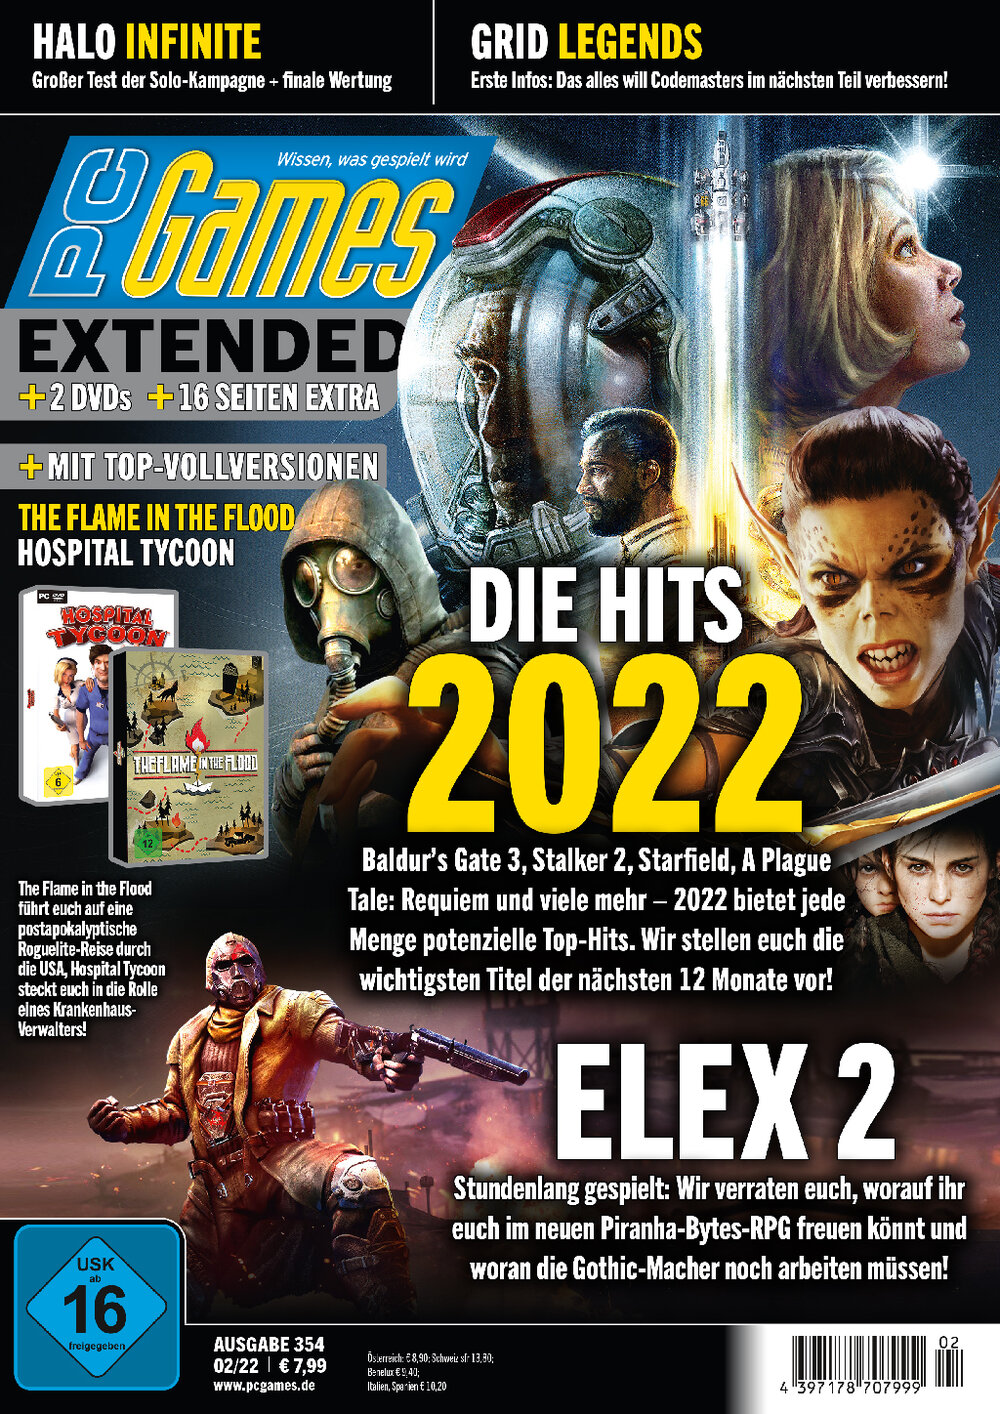 PC Games Magazin Print ohne DVD Jahresabo